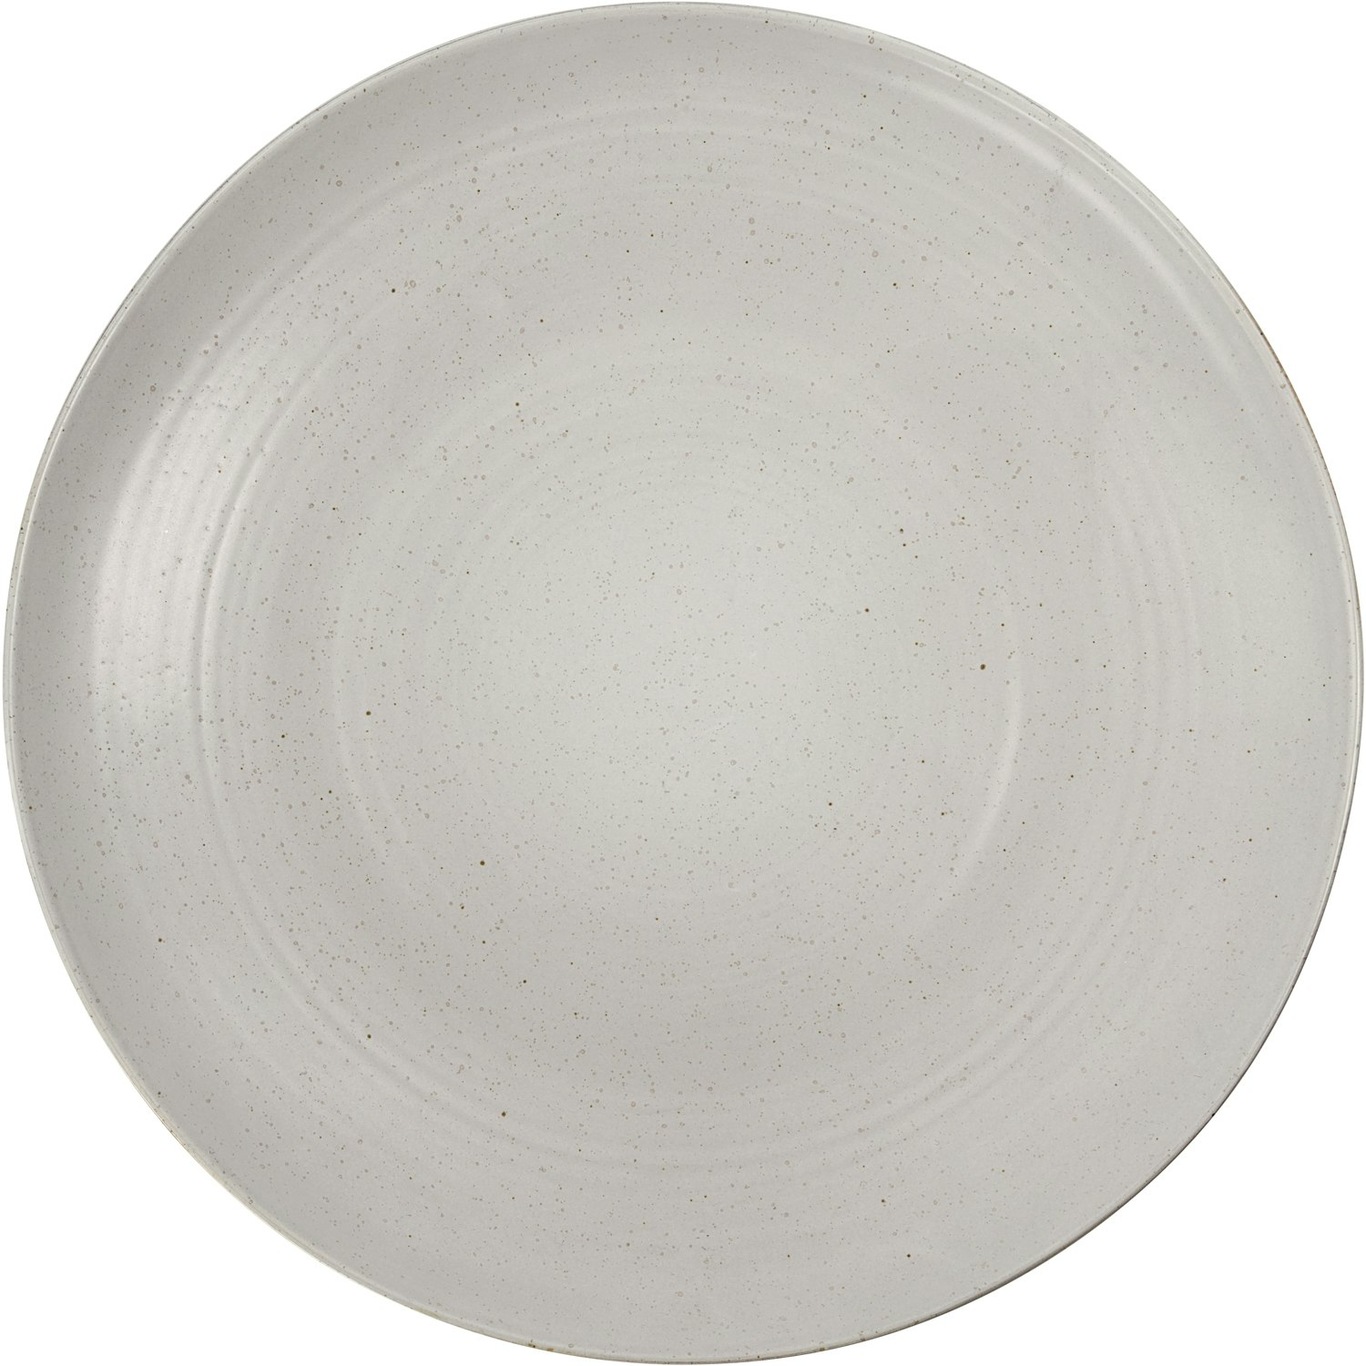 Pion Serving Dish 36 cm, Grey / White